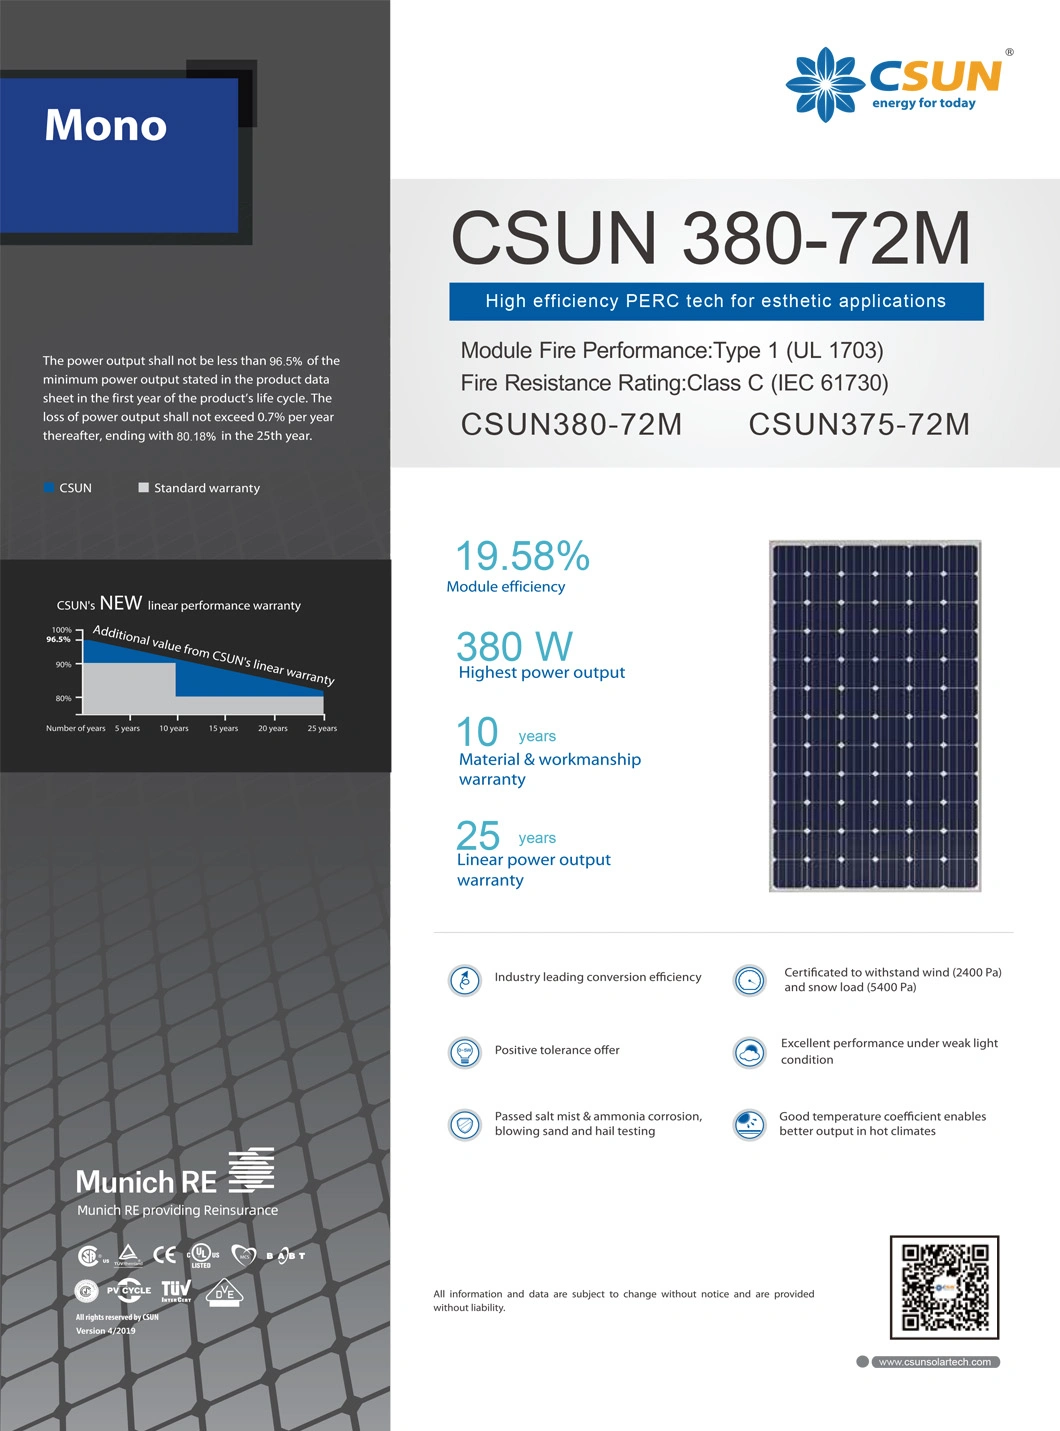 Csun Solar High Efficiency 72 Cells 375W Solar Panel